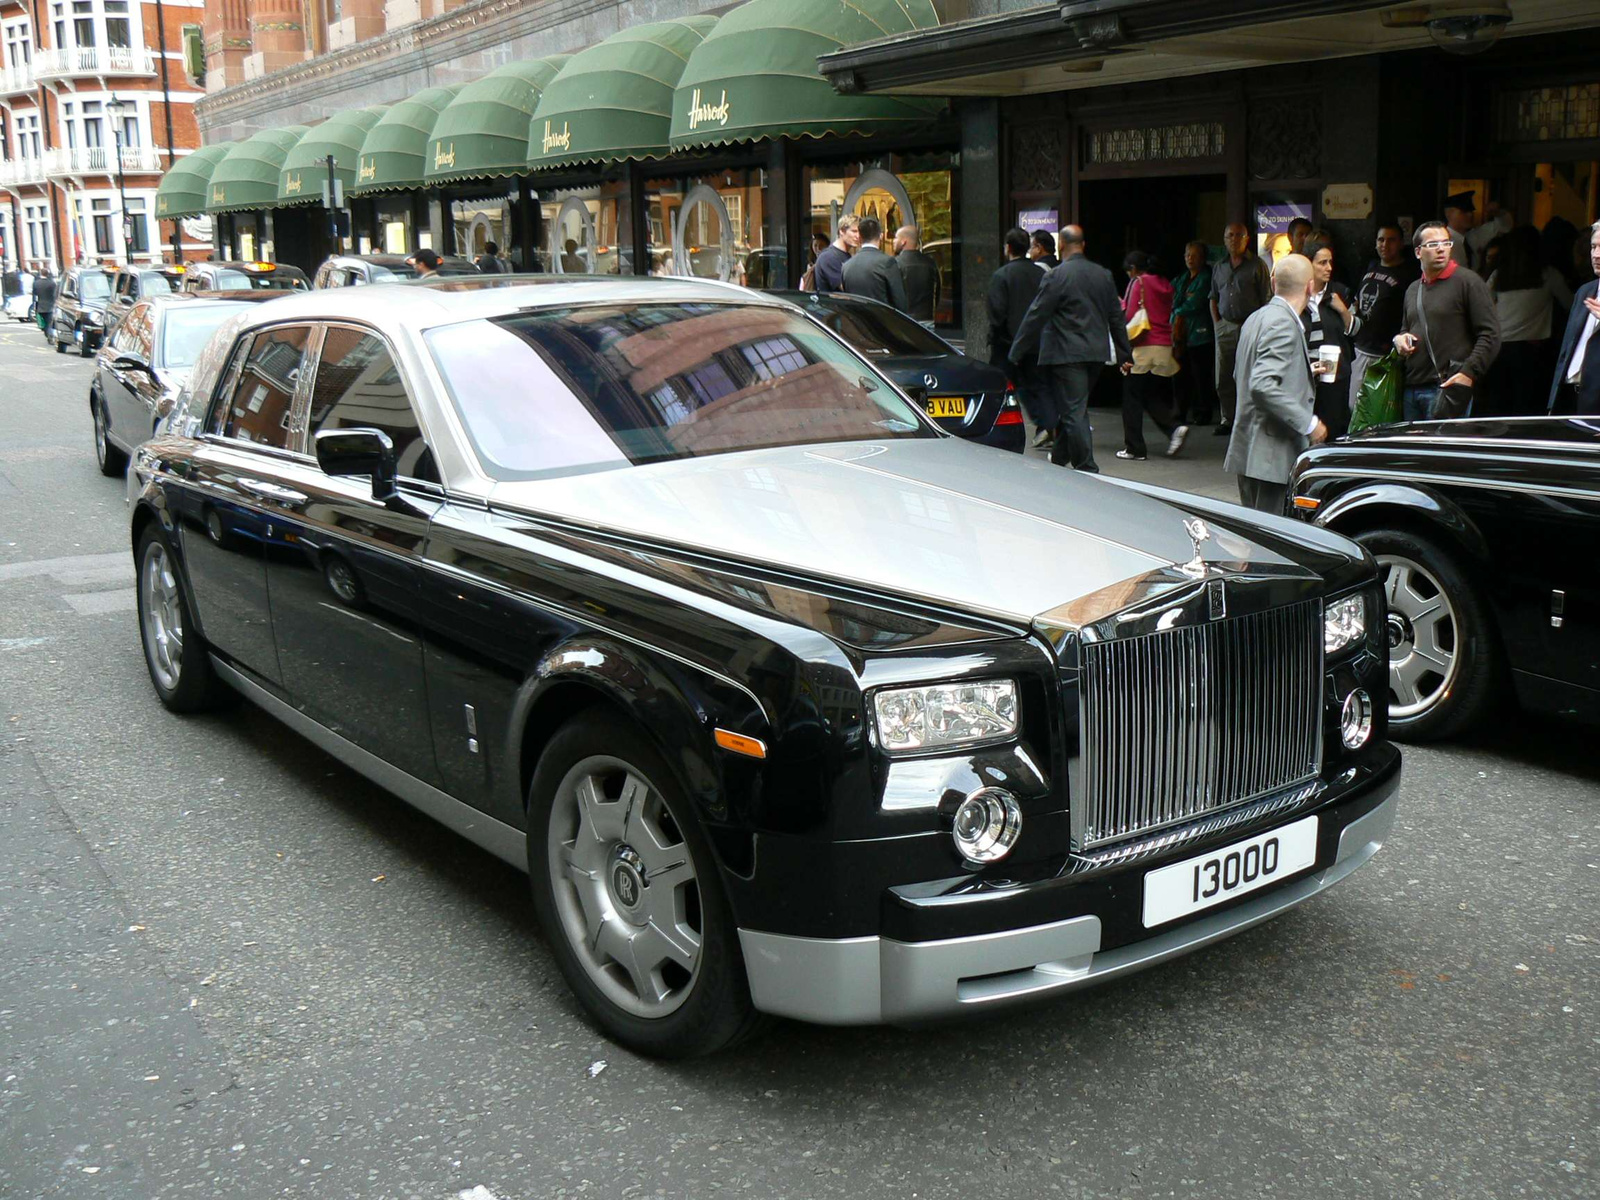 (6) Rolls-Royce Phantom